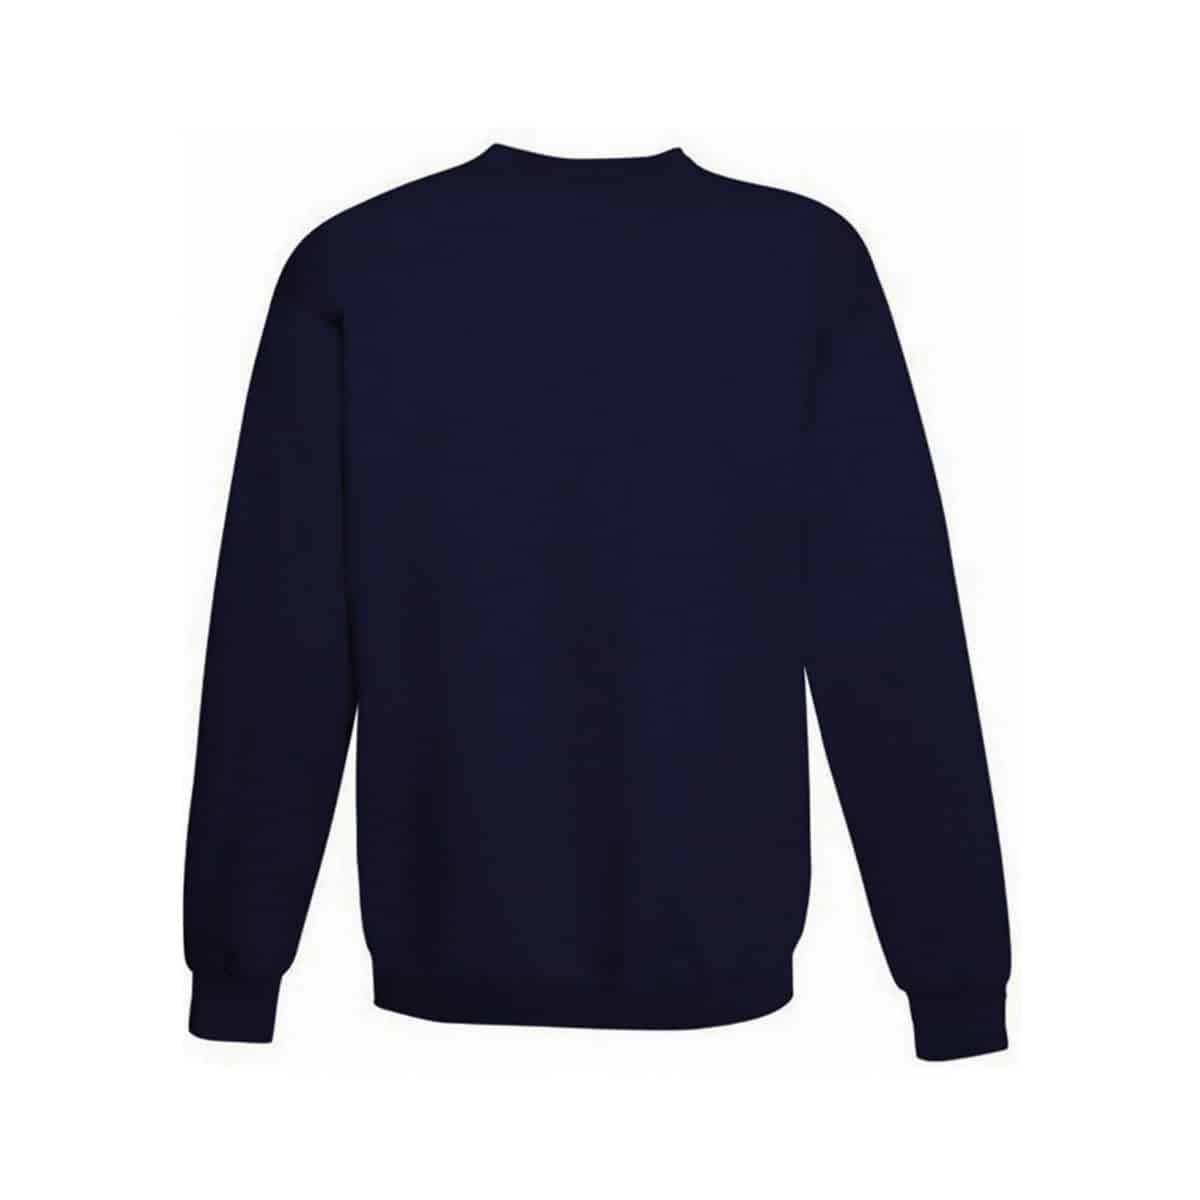 1UP 1UP Loves You Sweater Dark Blue Pullover Rundhals 